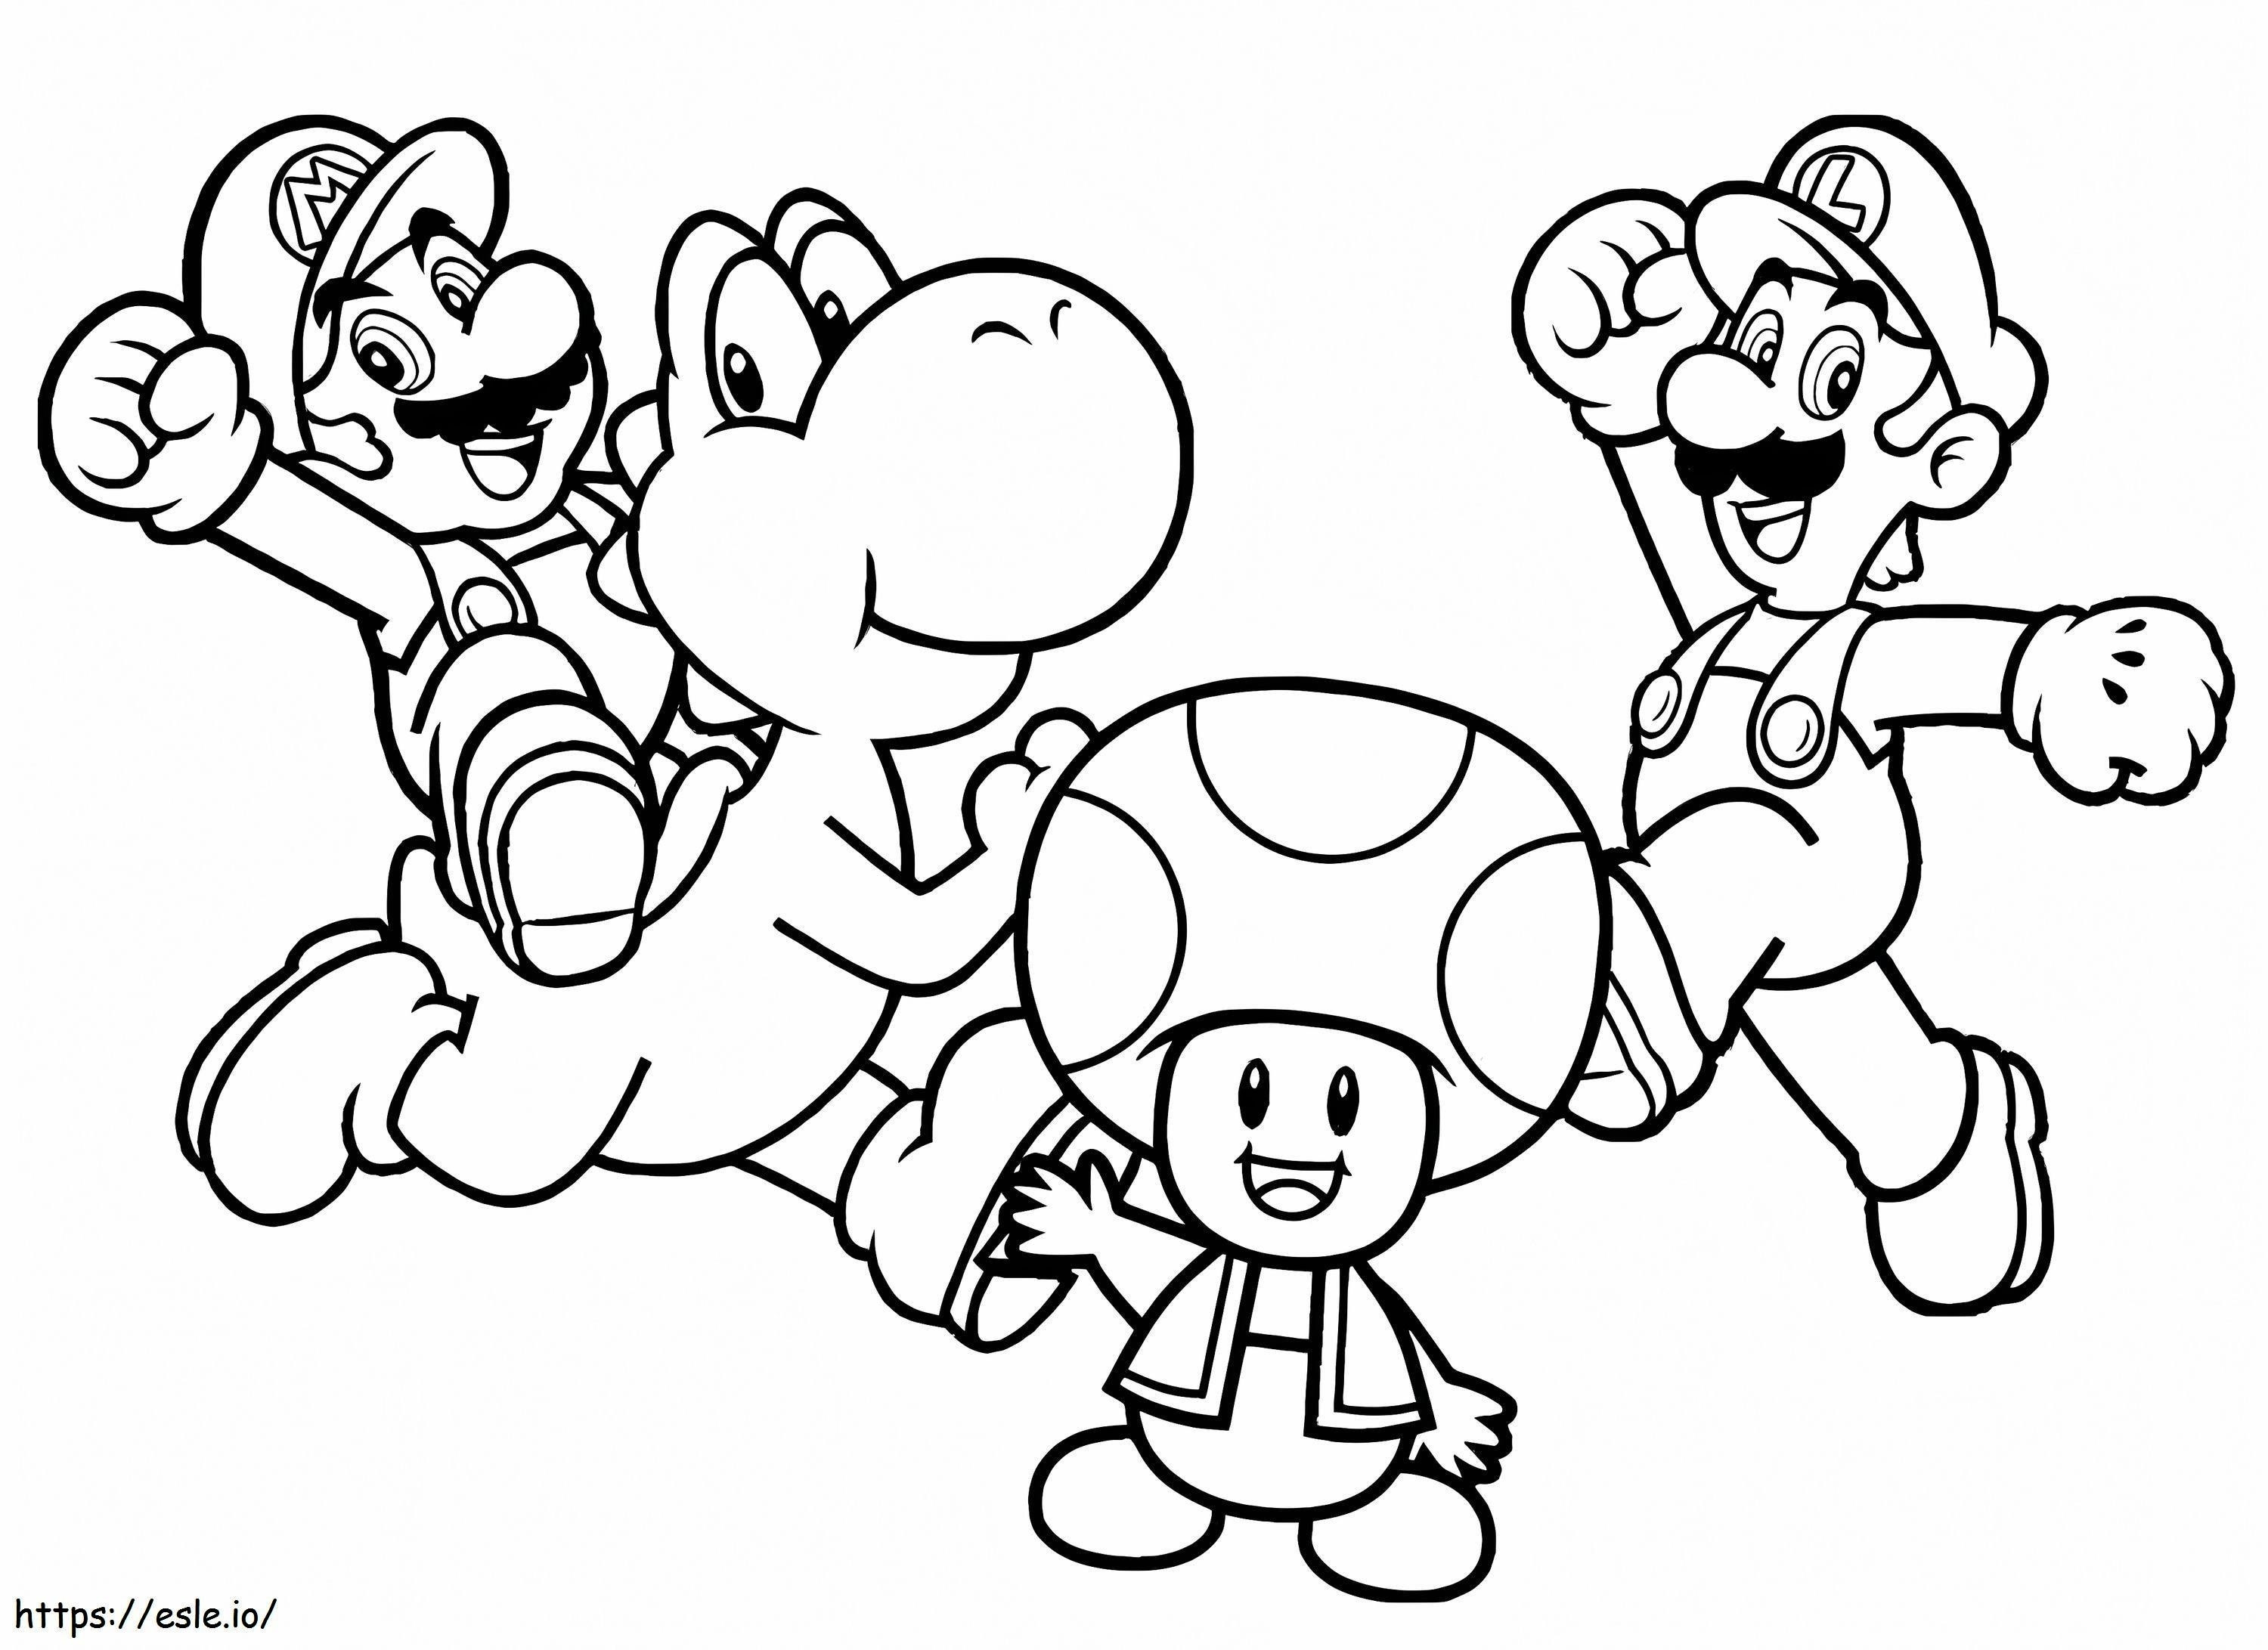 Mario-personages kleurplaat kleurplaat